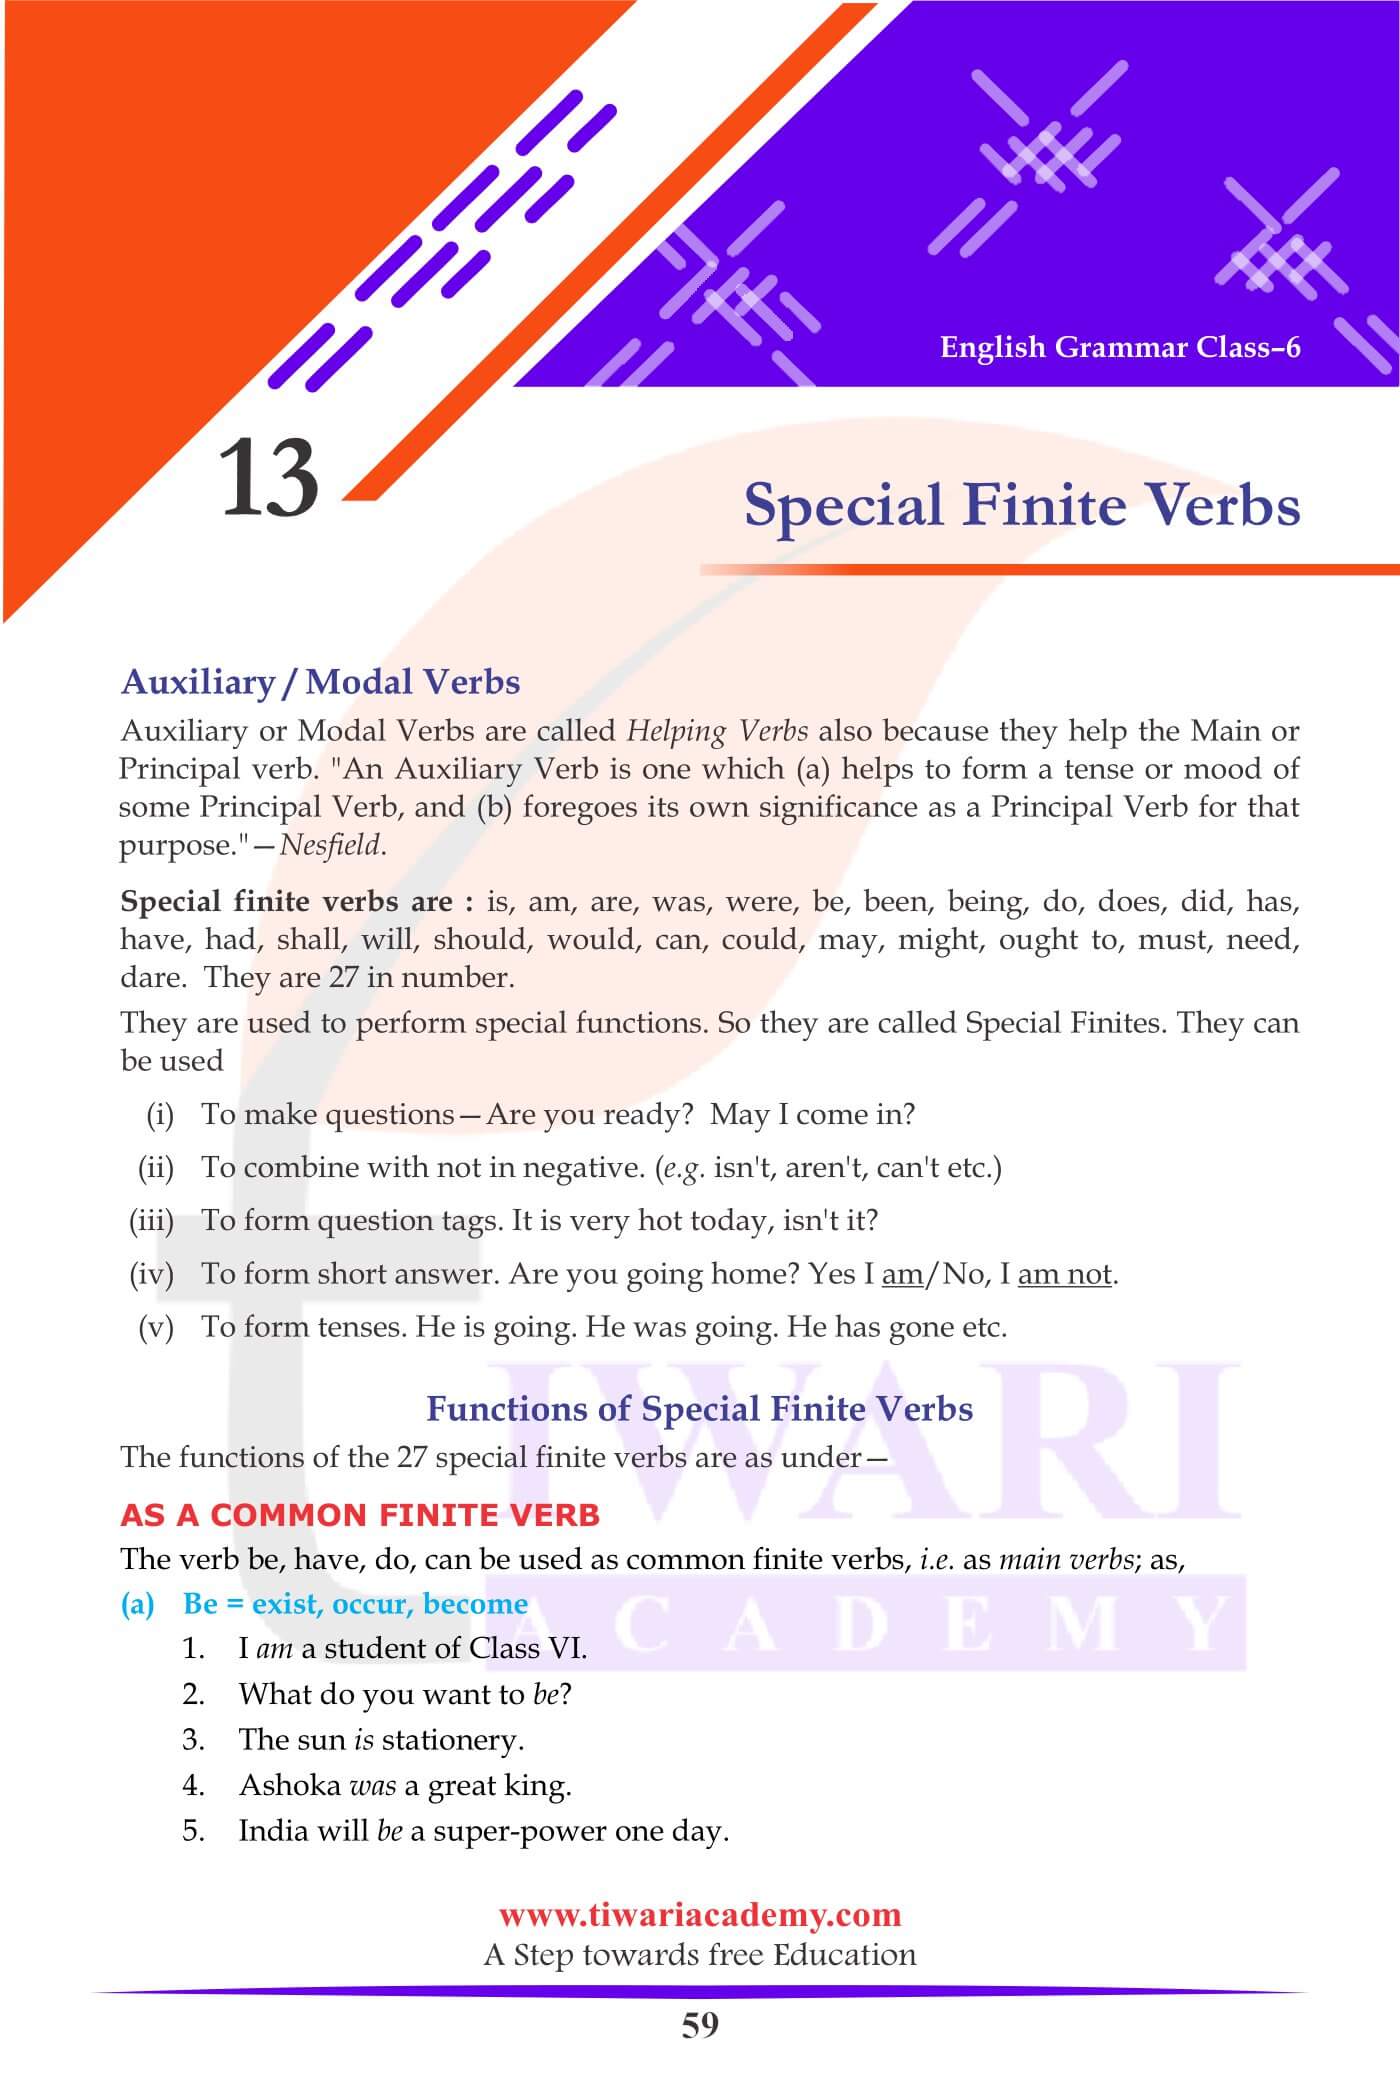 Class 6 English Grammar Chapter 13 Special Finite Verbs